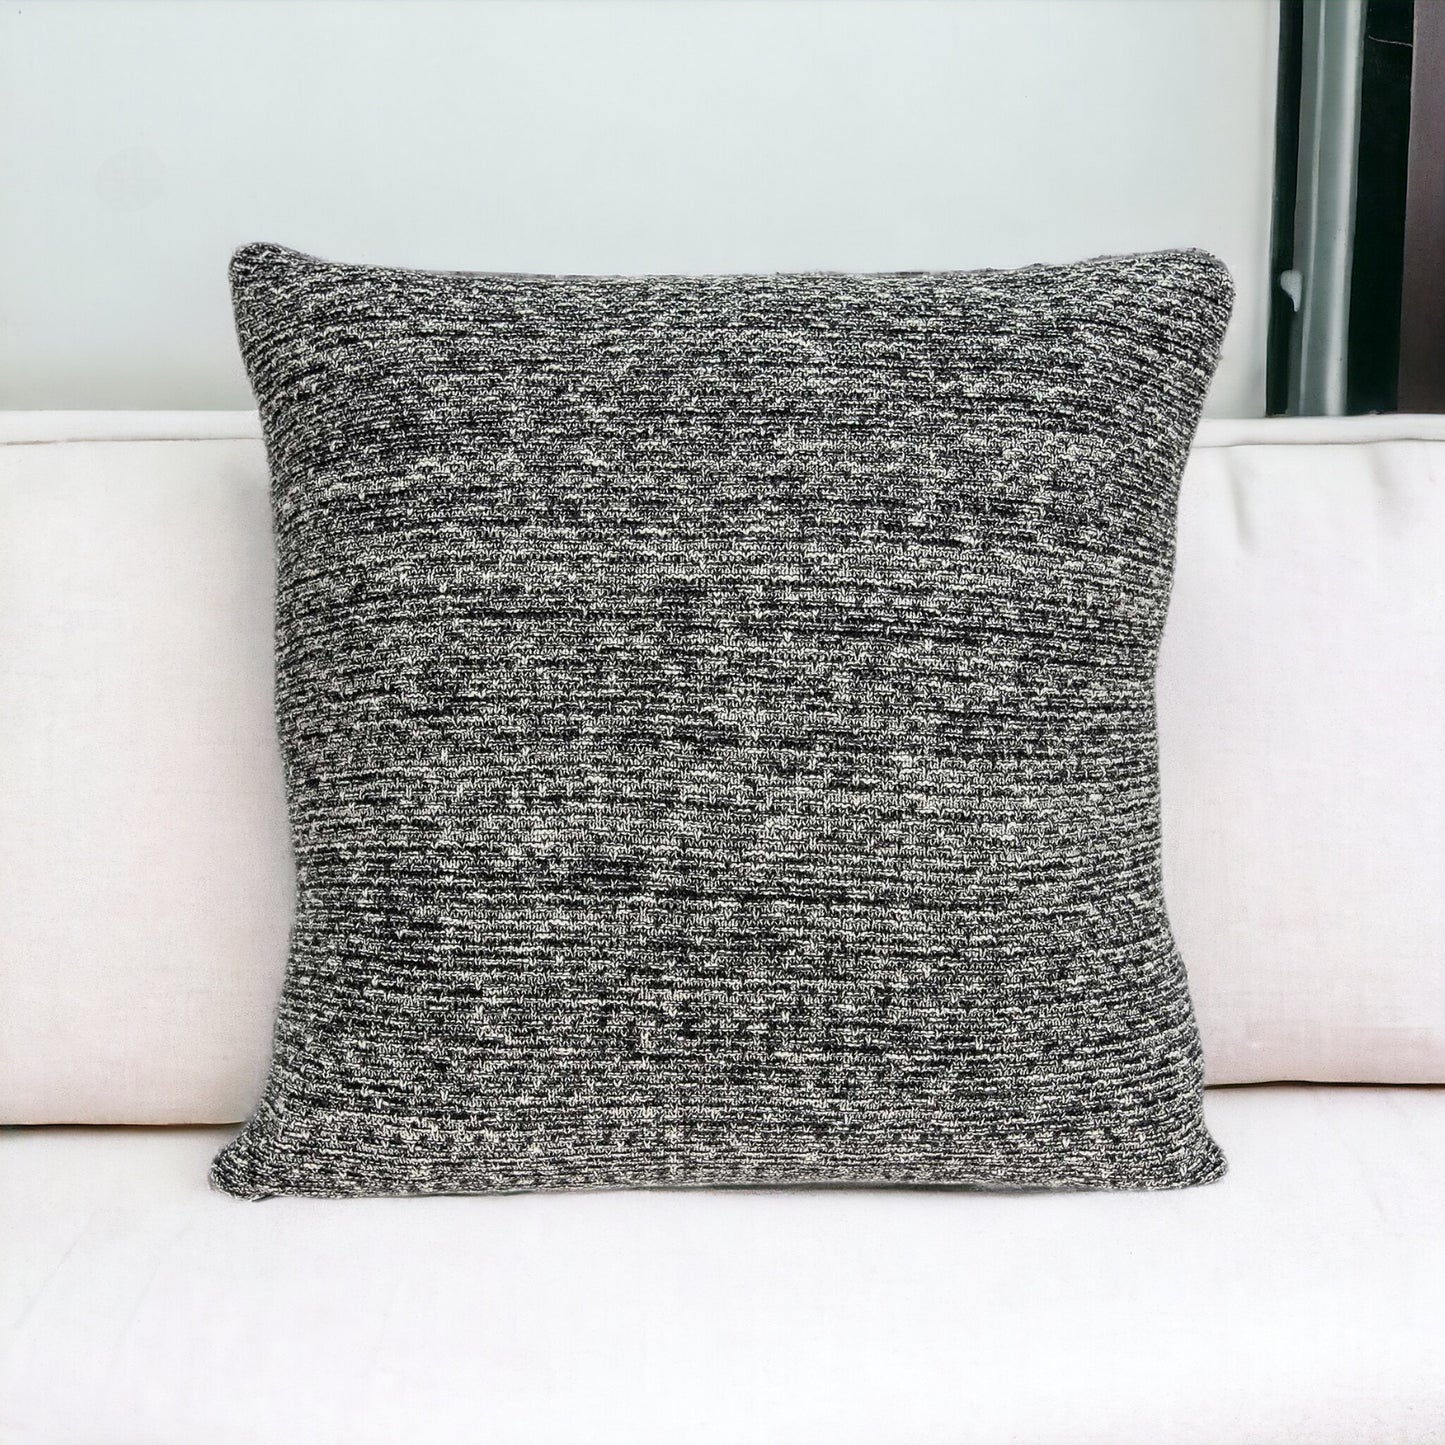 20" Charcoal Woven Cotton Blend Throw Pillow